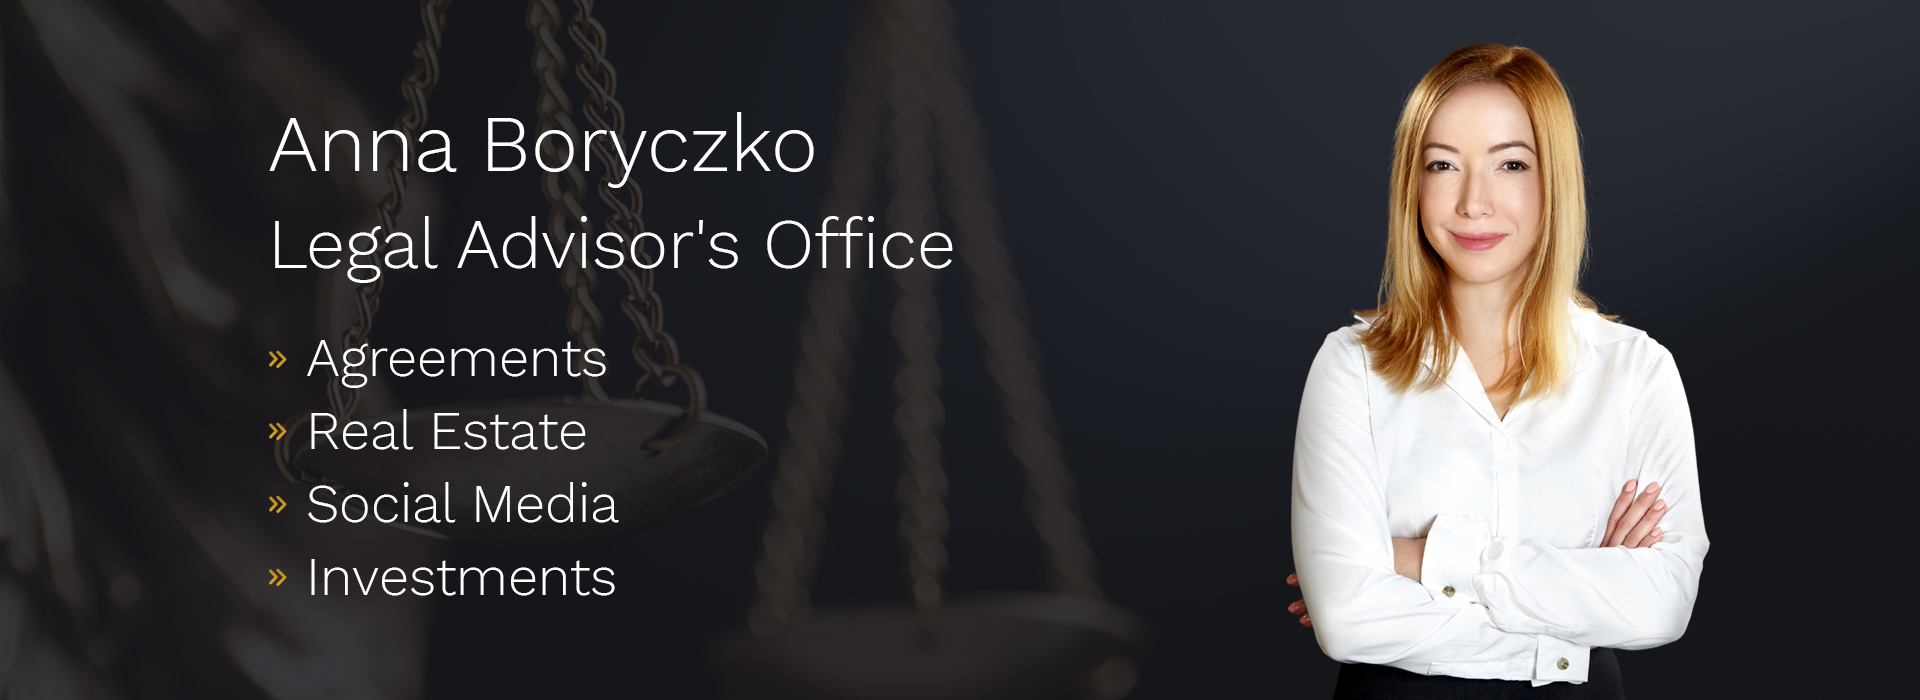 Legal Advisor's Office Anna Boryczko